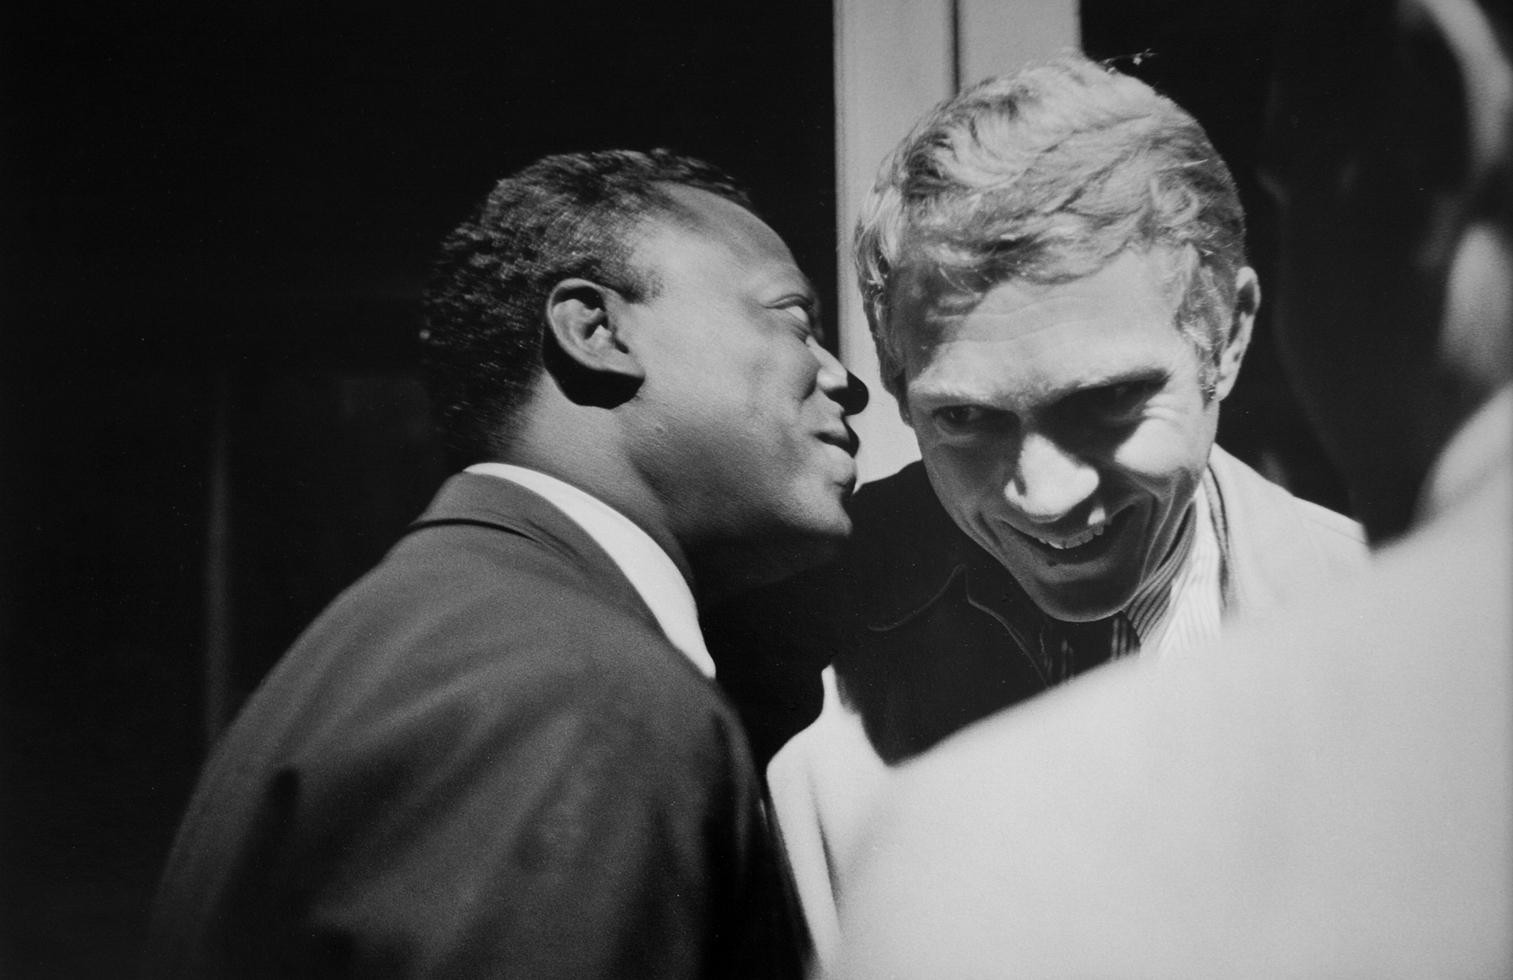 Miles Davis and Steve McQueen were both Rh(D) negative